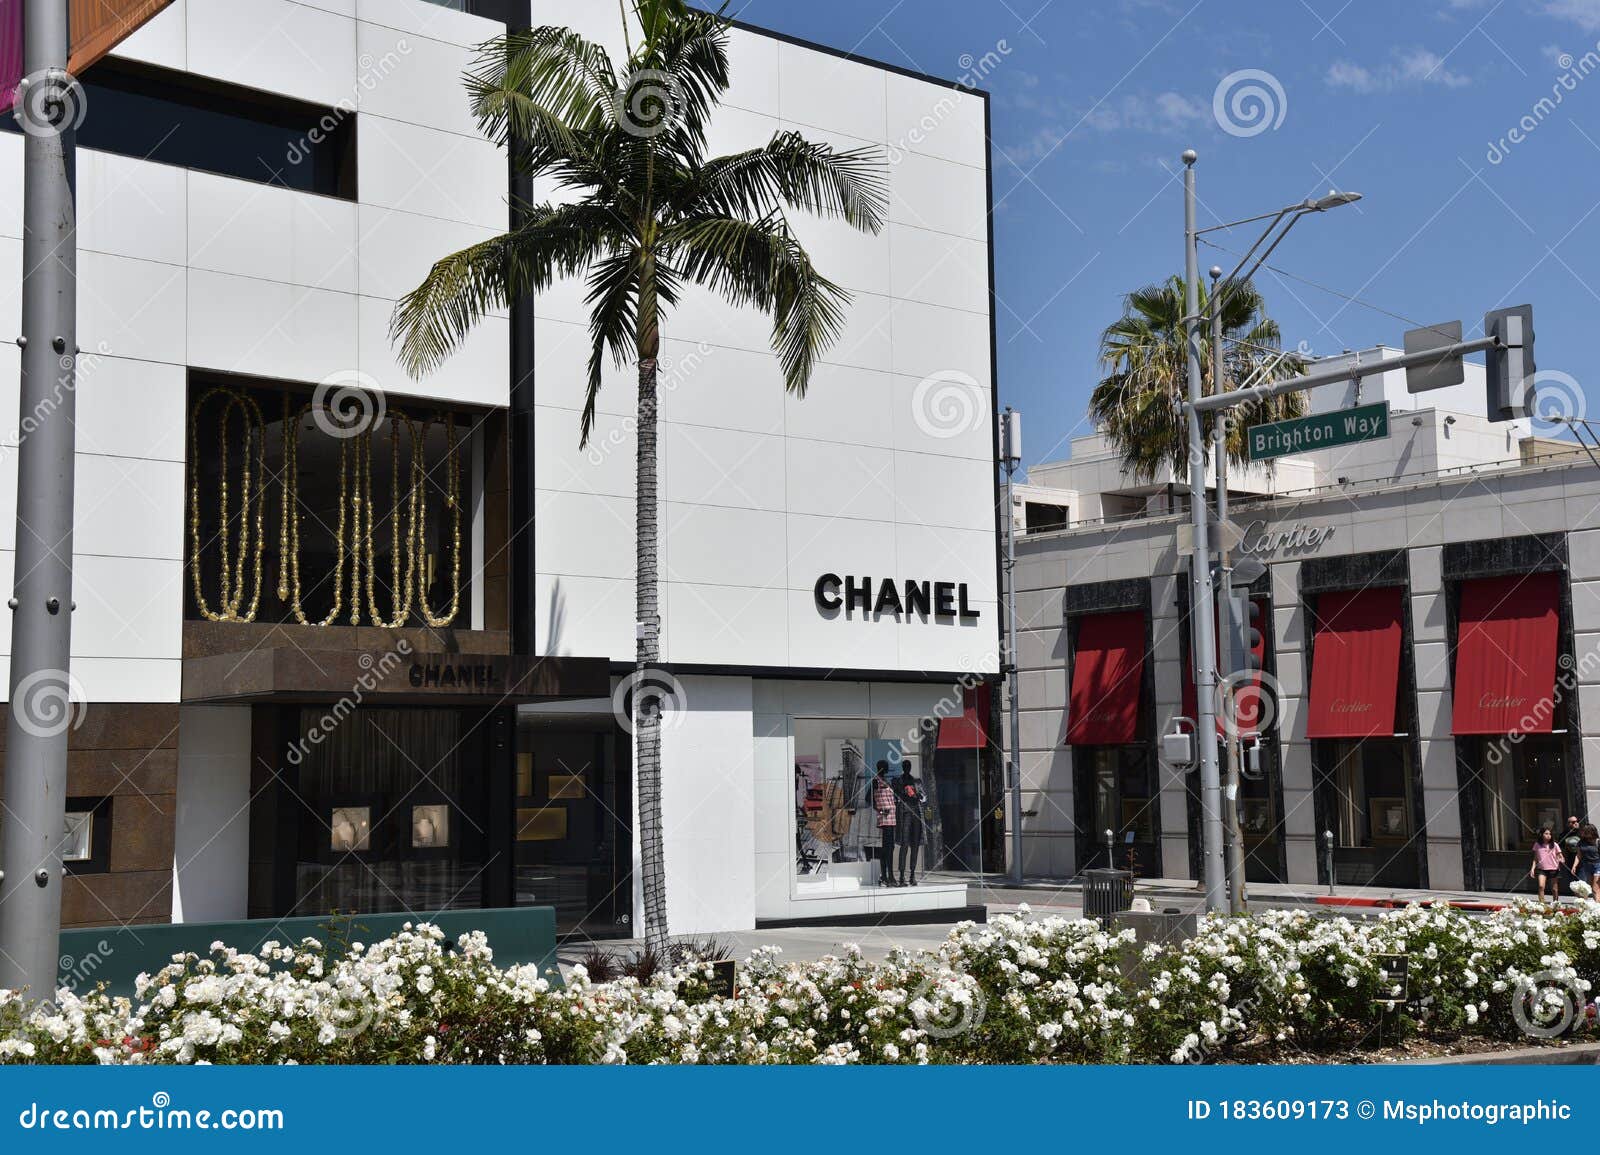 Chanel Store Closed Quarantine Editorial Stock Photo - Image of beverly,  quarantine: 183609173